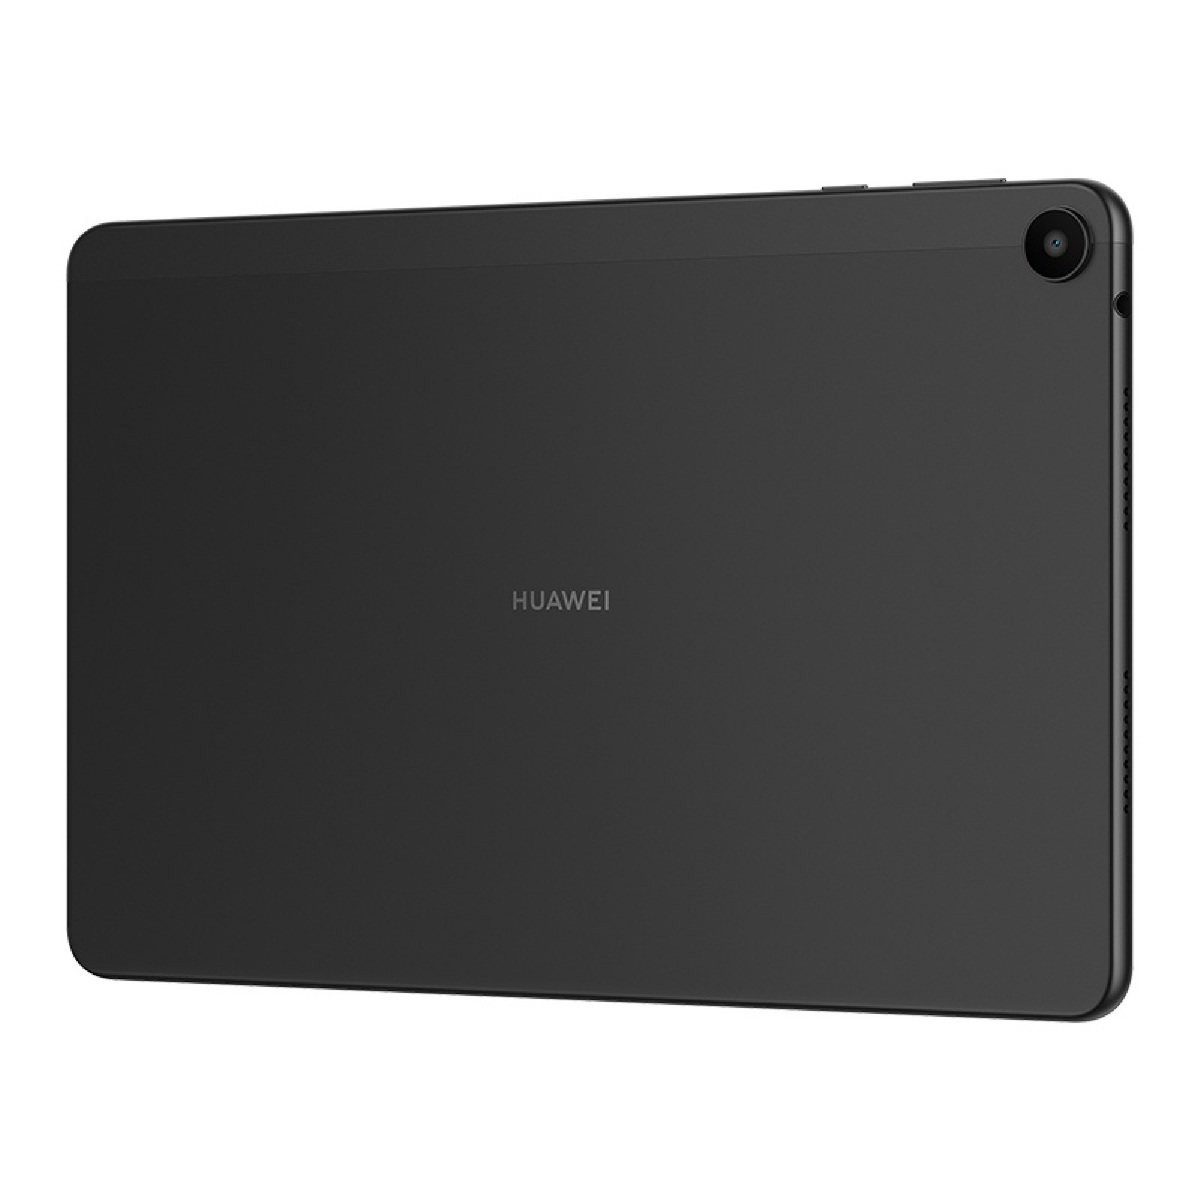 Huawei MatePad SE-L09 10.4inches,32GB ROM,3GB RAM,WiFi, 4G LTE, Graphite Black